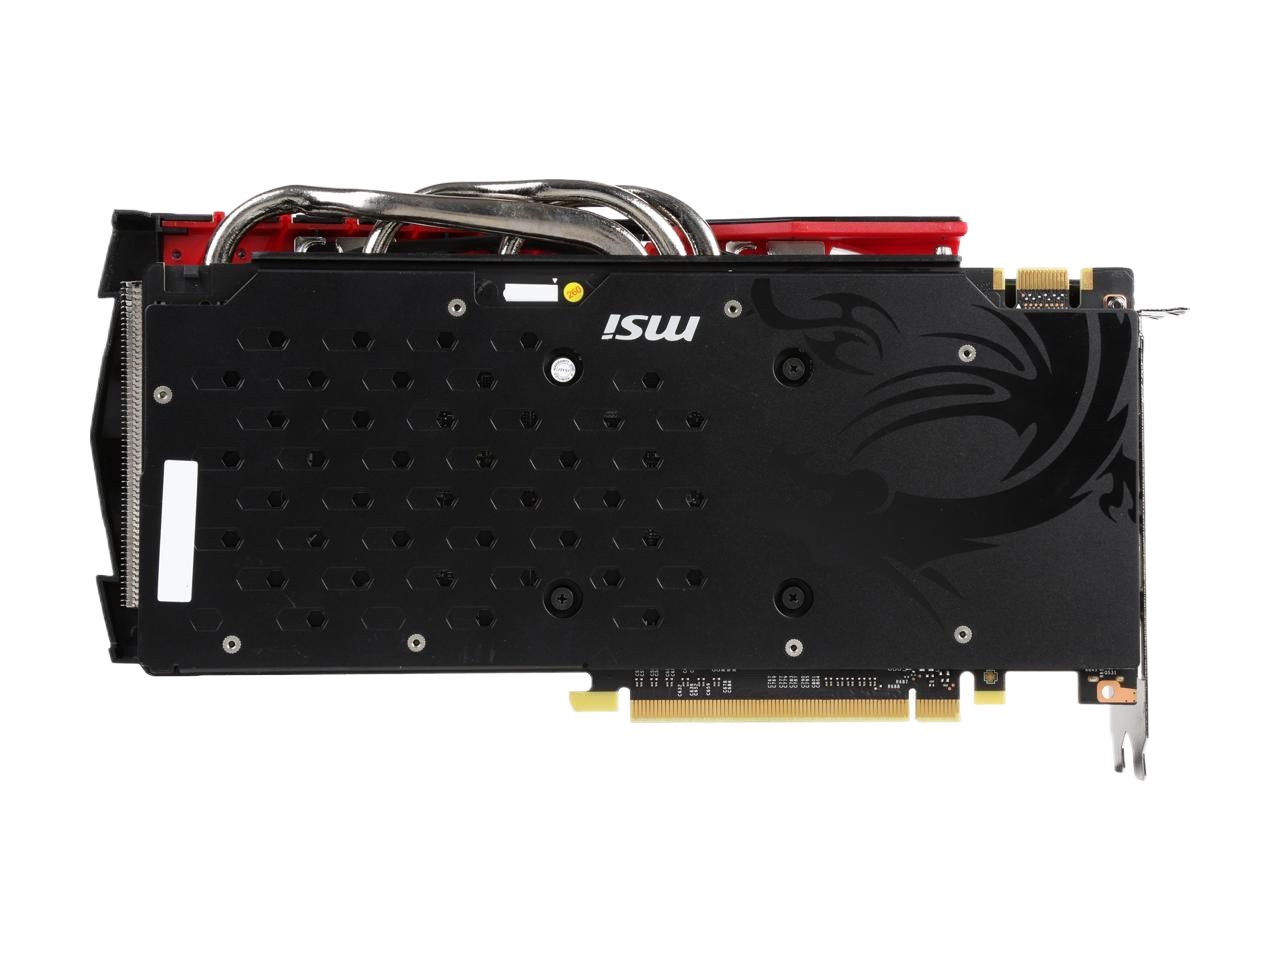 MSI GeForce GTX 960 GAMING DirectX 12 4GB 128-Bit GDDR5 PCI Express 3.0 x16 HDCP Ready SLI Support ATX Video Card